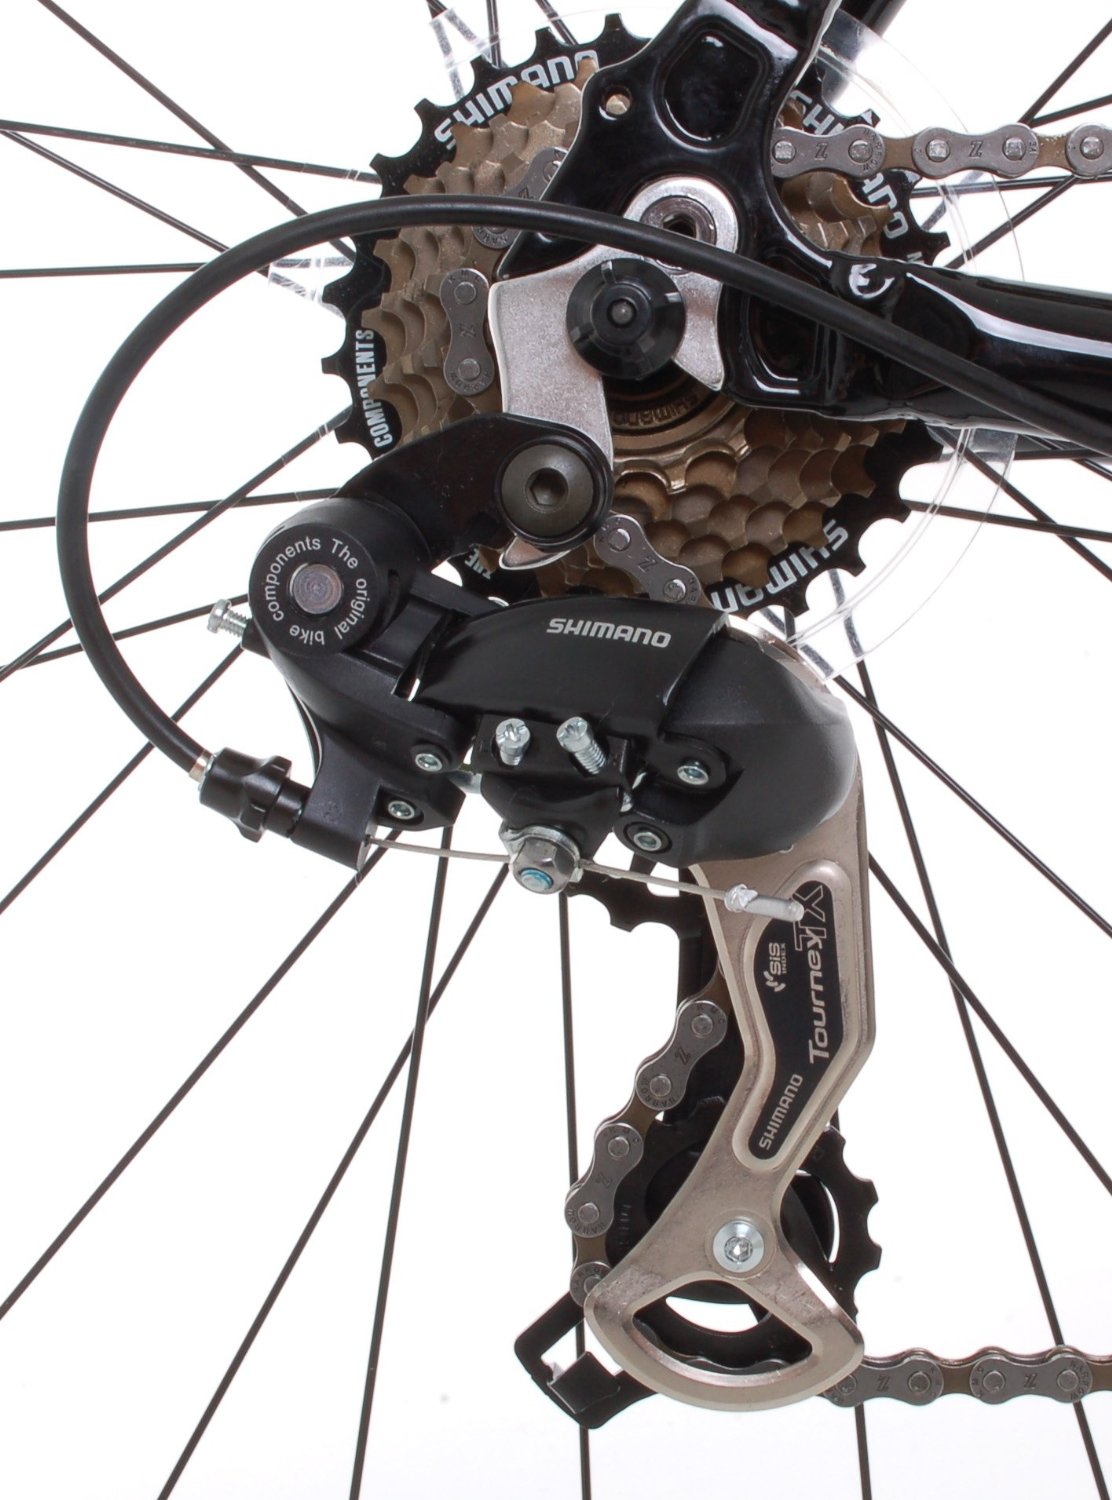 Vilano Shadow Road Bike with shimano gears